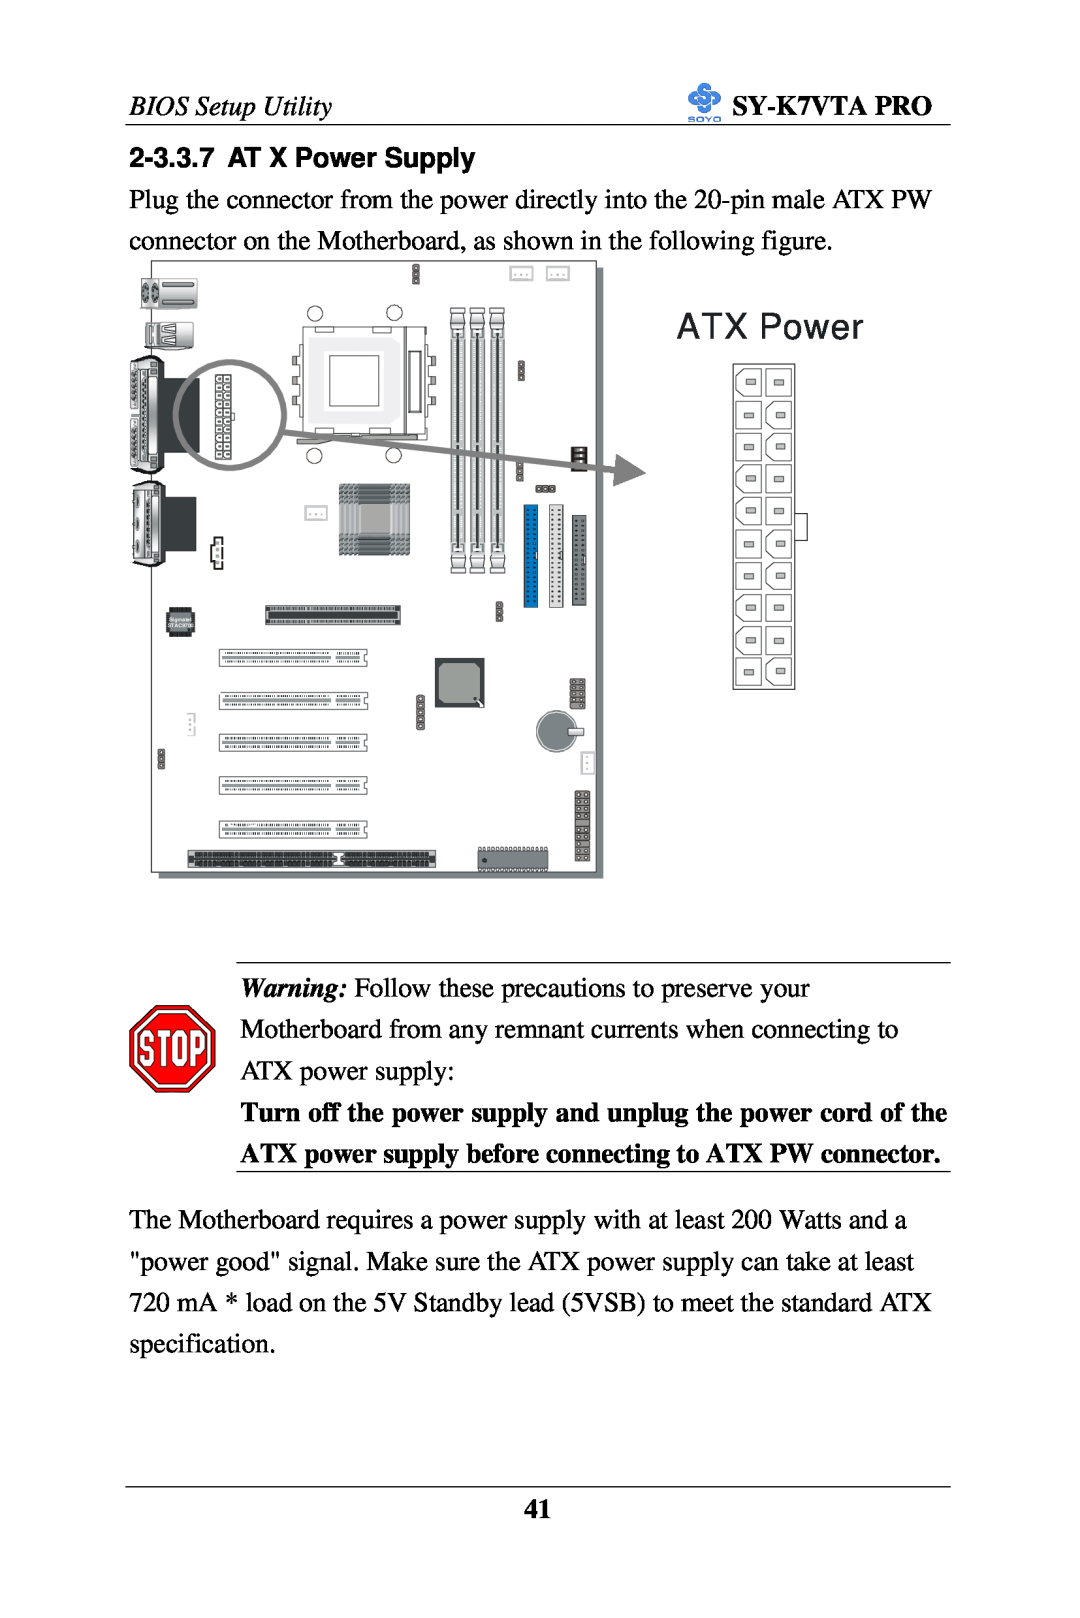 SOYO SY-K7VTA PRO user manual AT X Power Supply, ATX Power, BIOS Setup Utility 